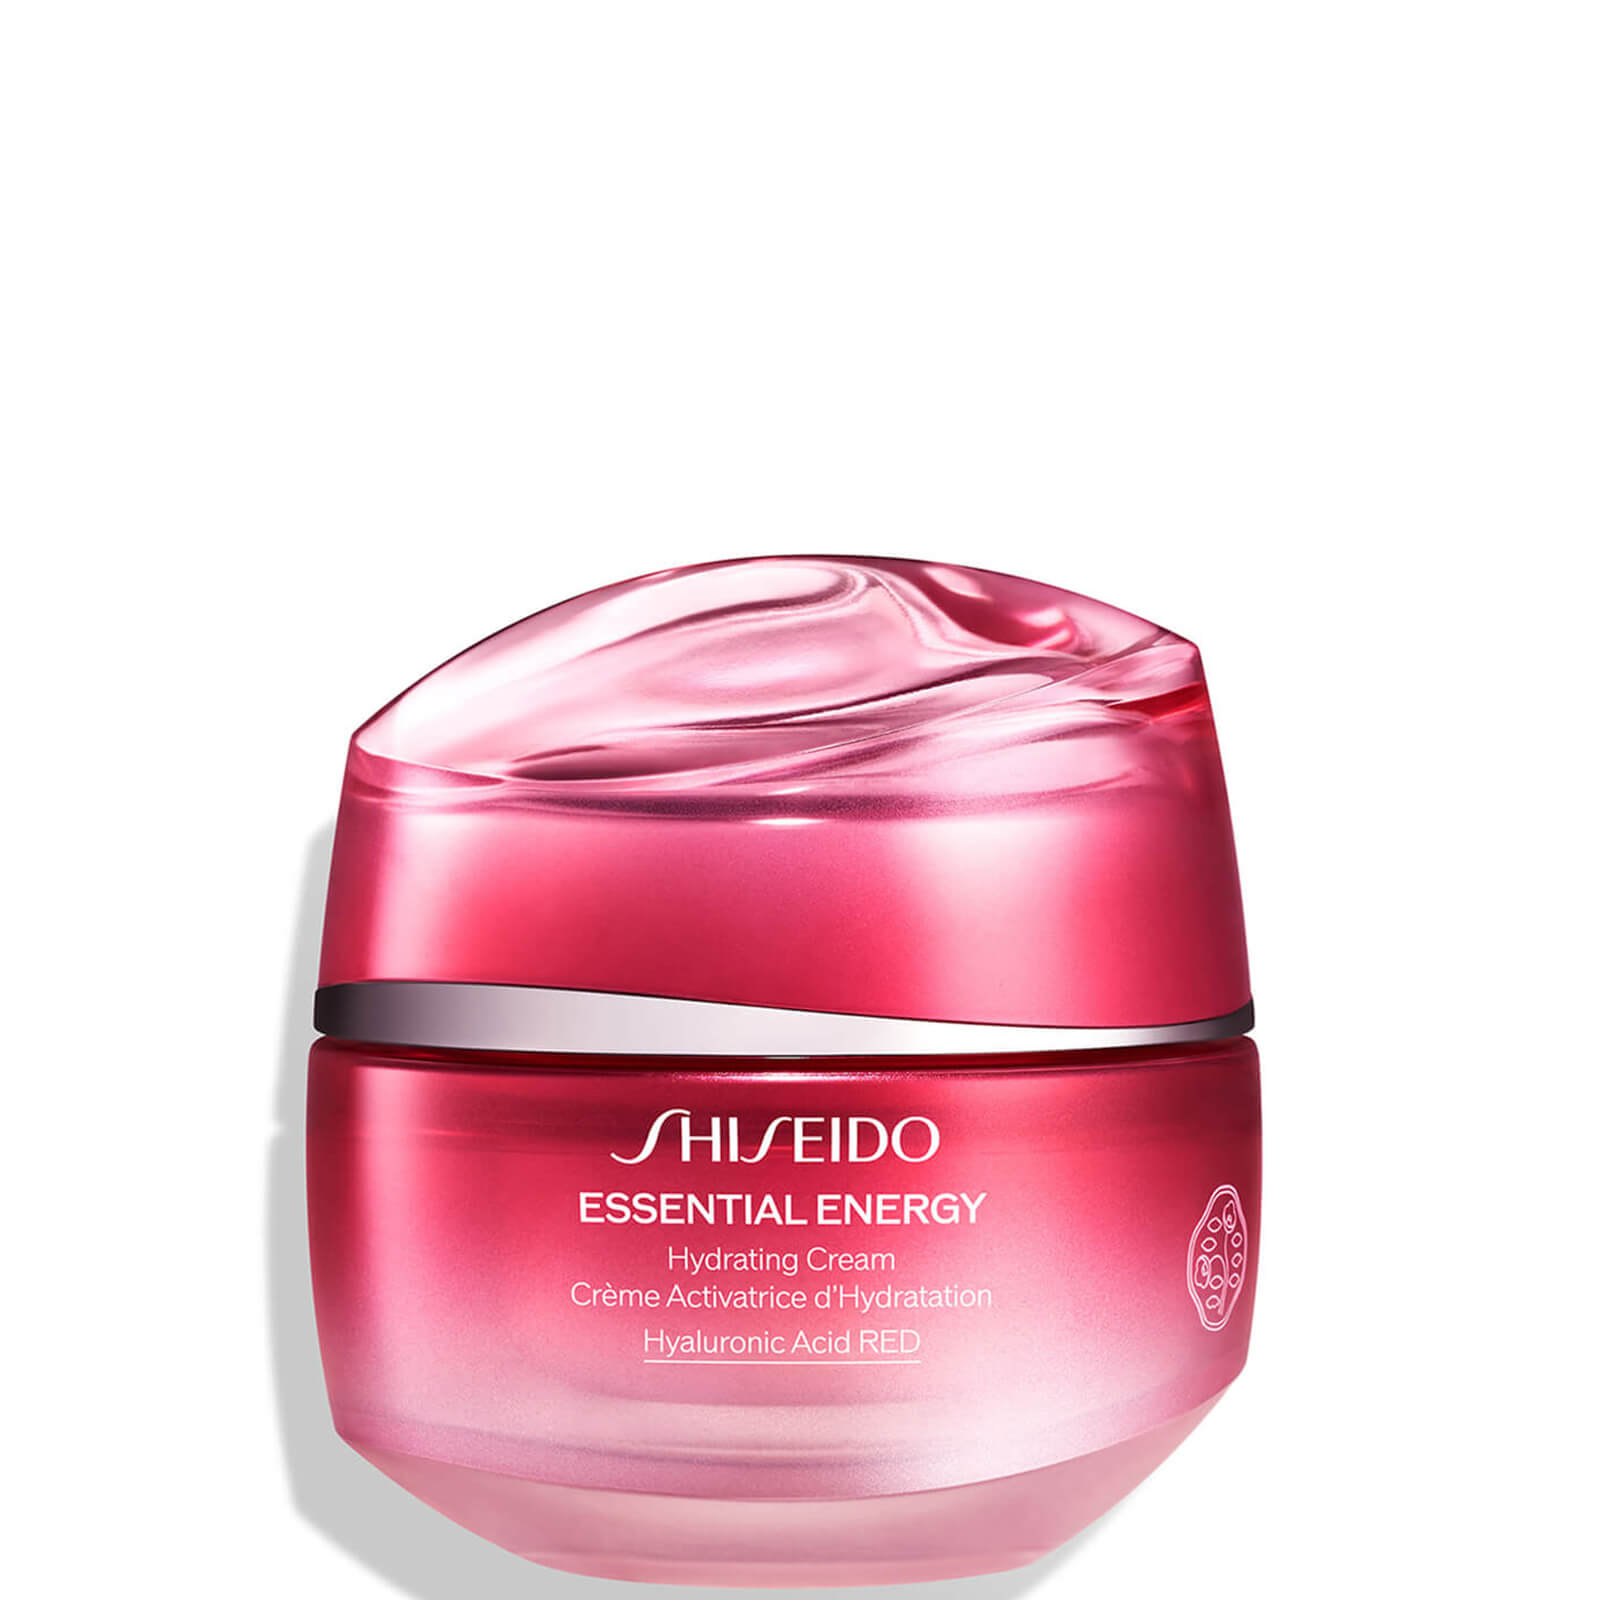 Zdjęcia - Kremy i toniki Shiseido Essential Energy Hydrating Cream 50ml 10118285101 